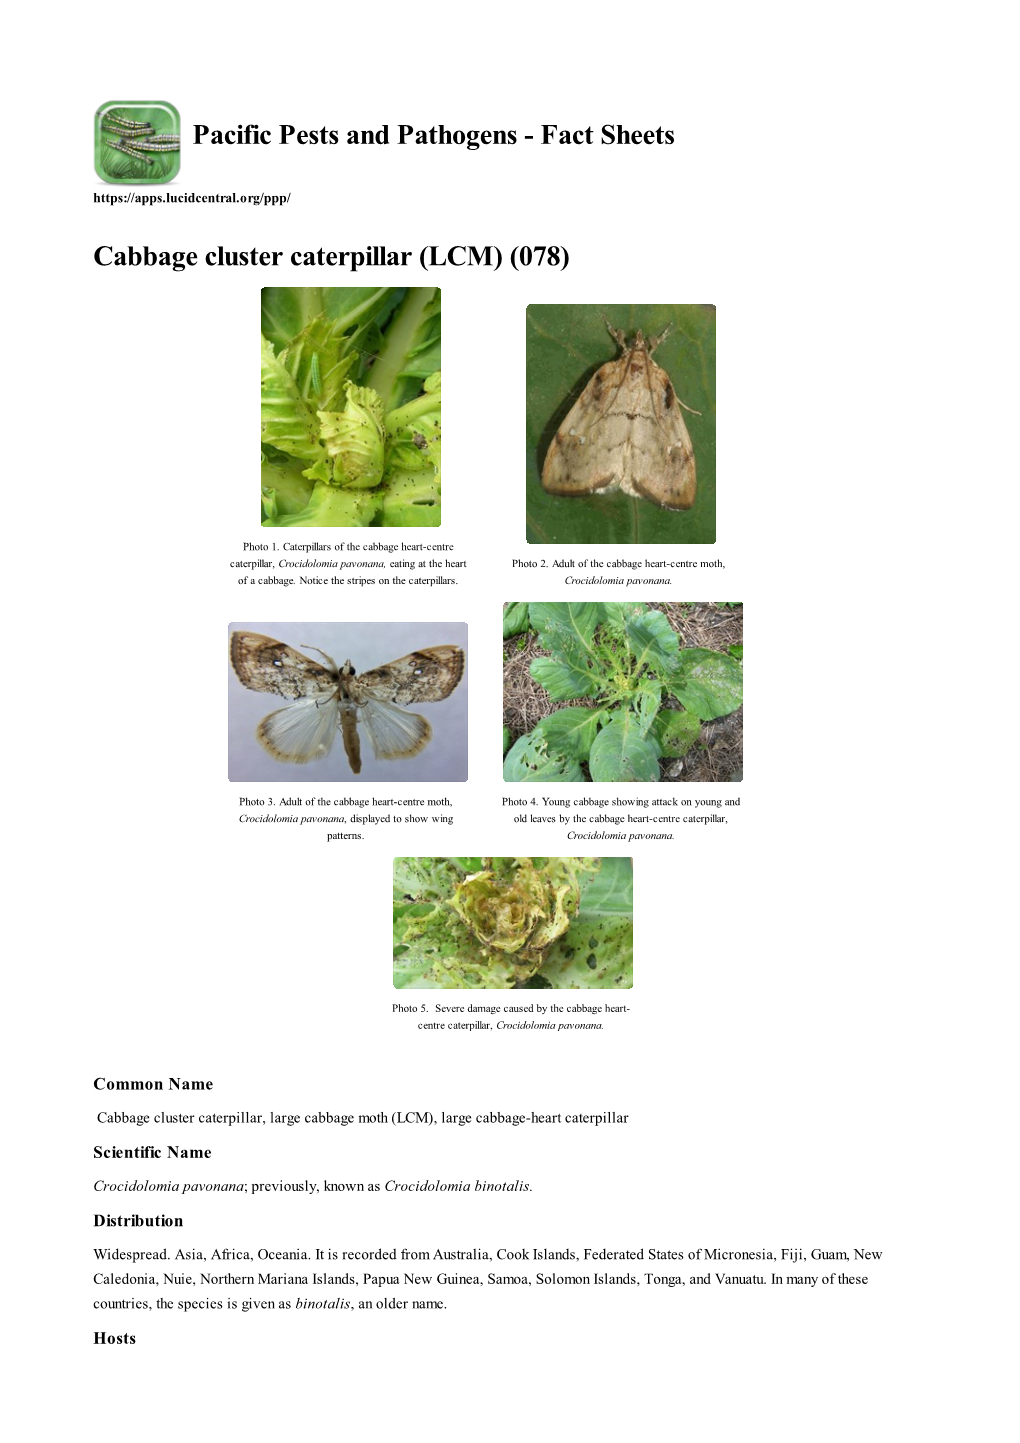 Cabbage Cluster Caterpillar (LCM) (078)